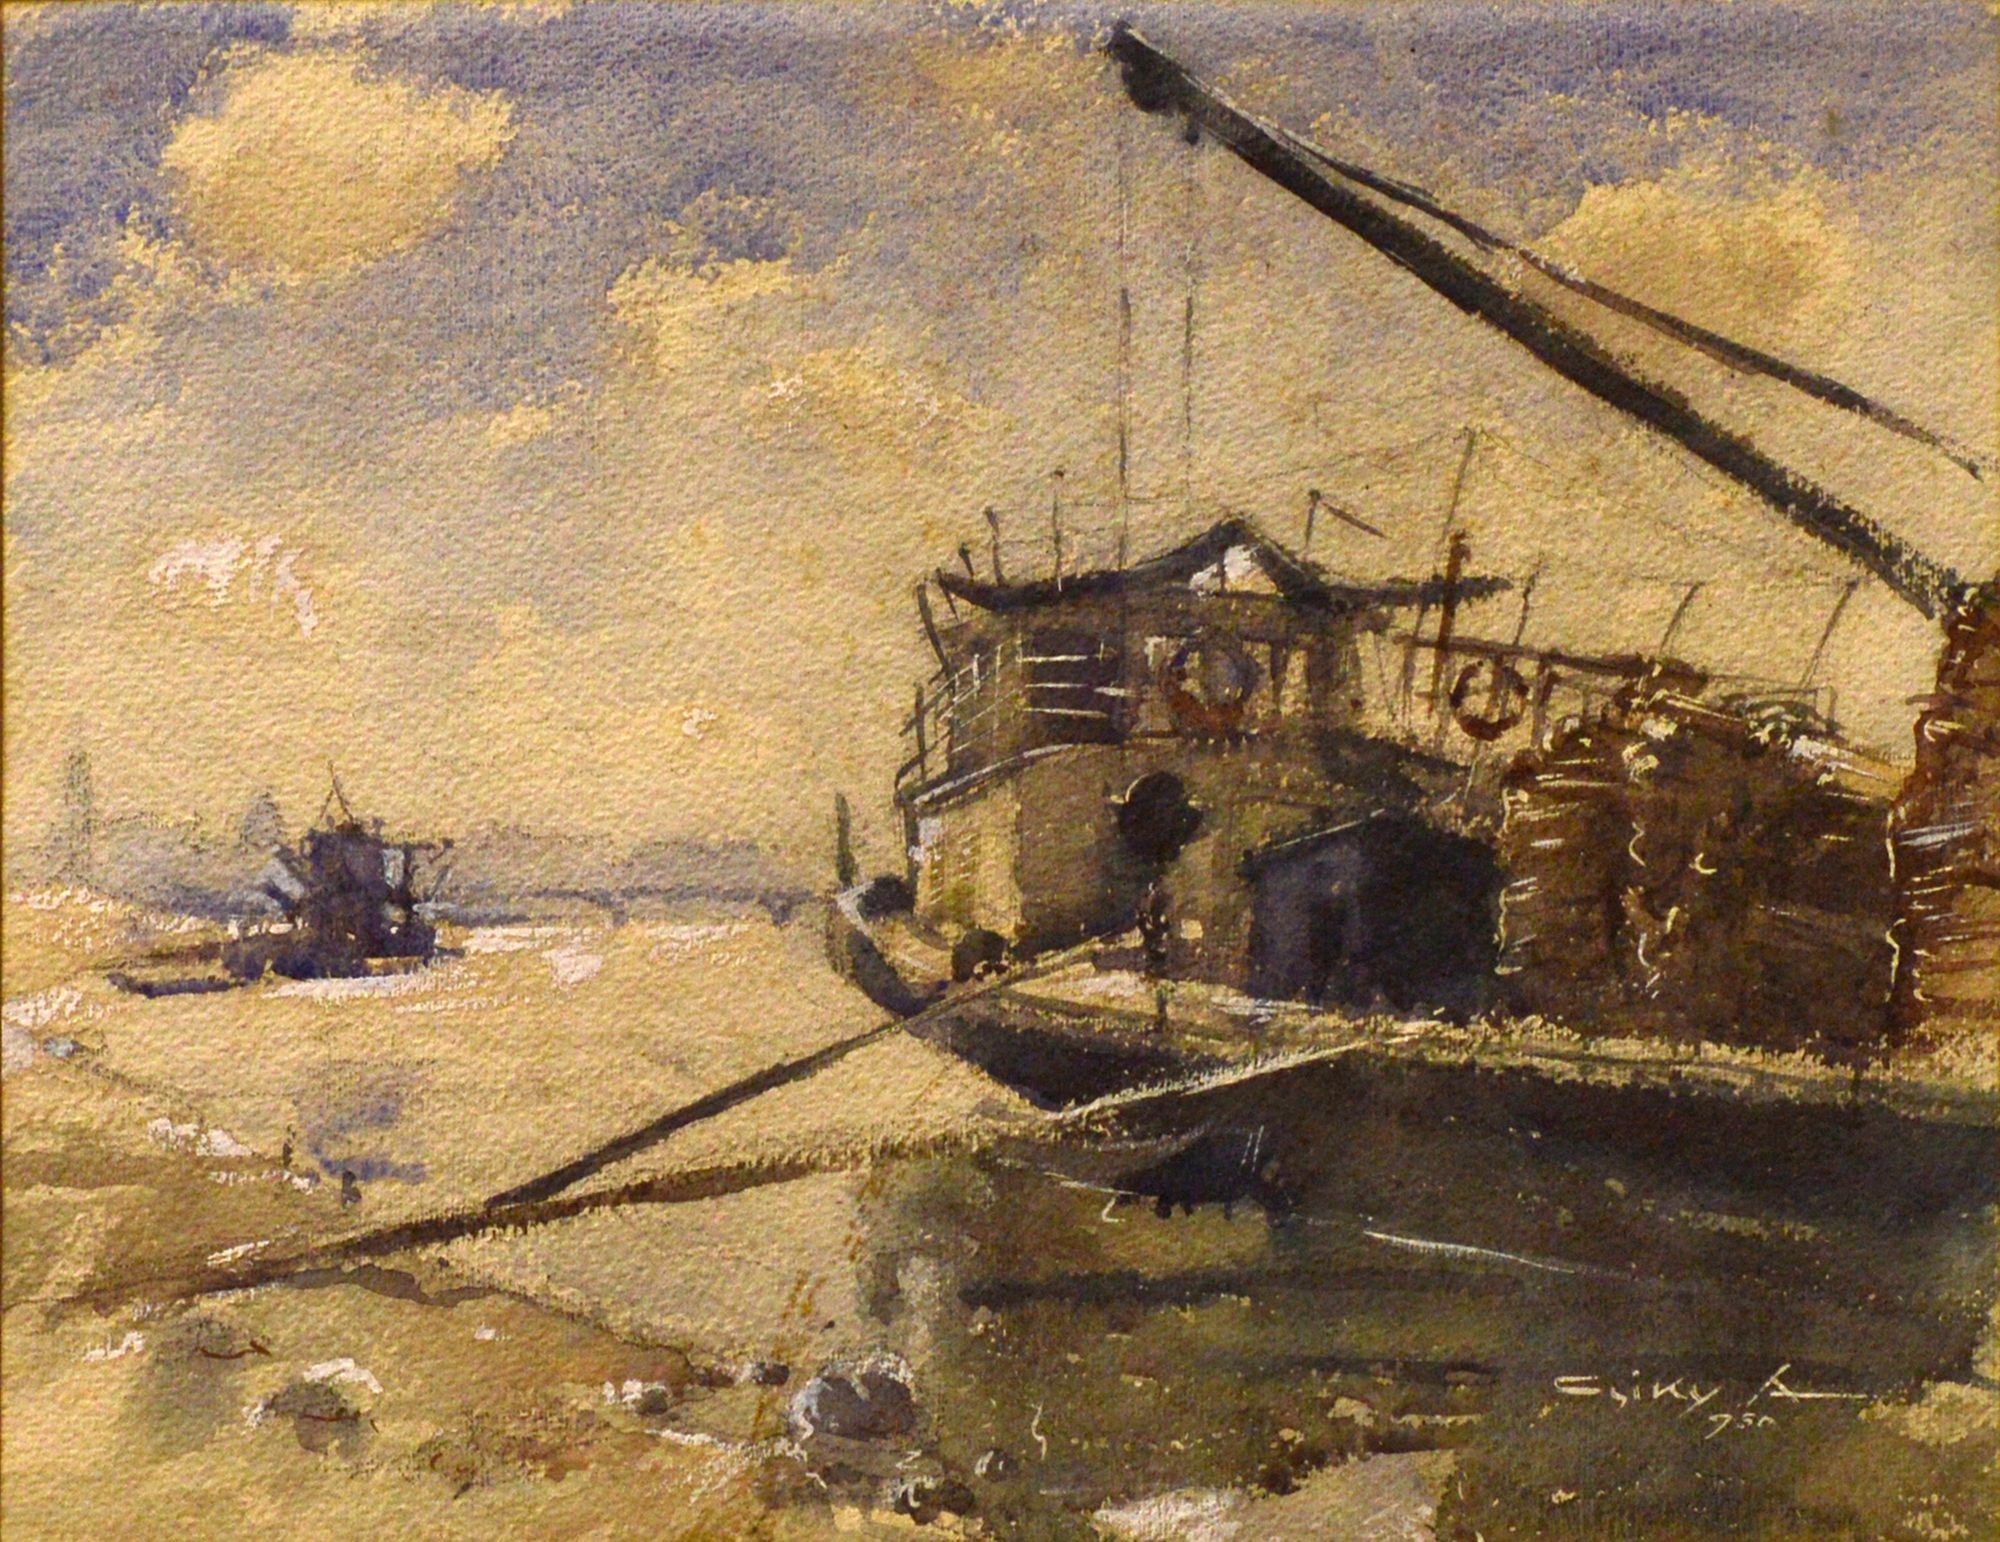 Kikötő (Rippl-Rónai Múzeum CC BY-NC-SA)